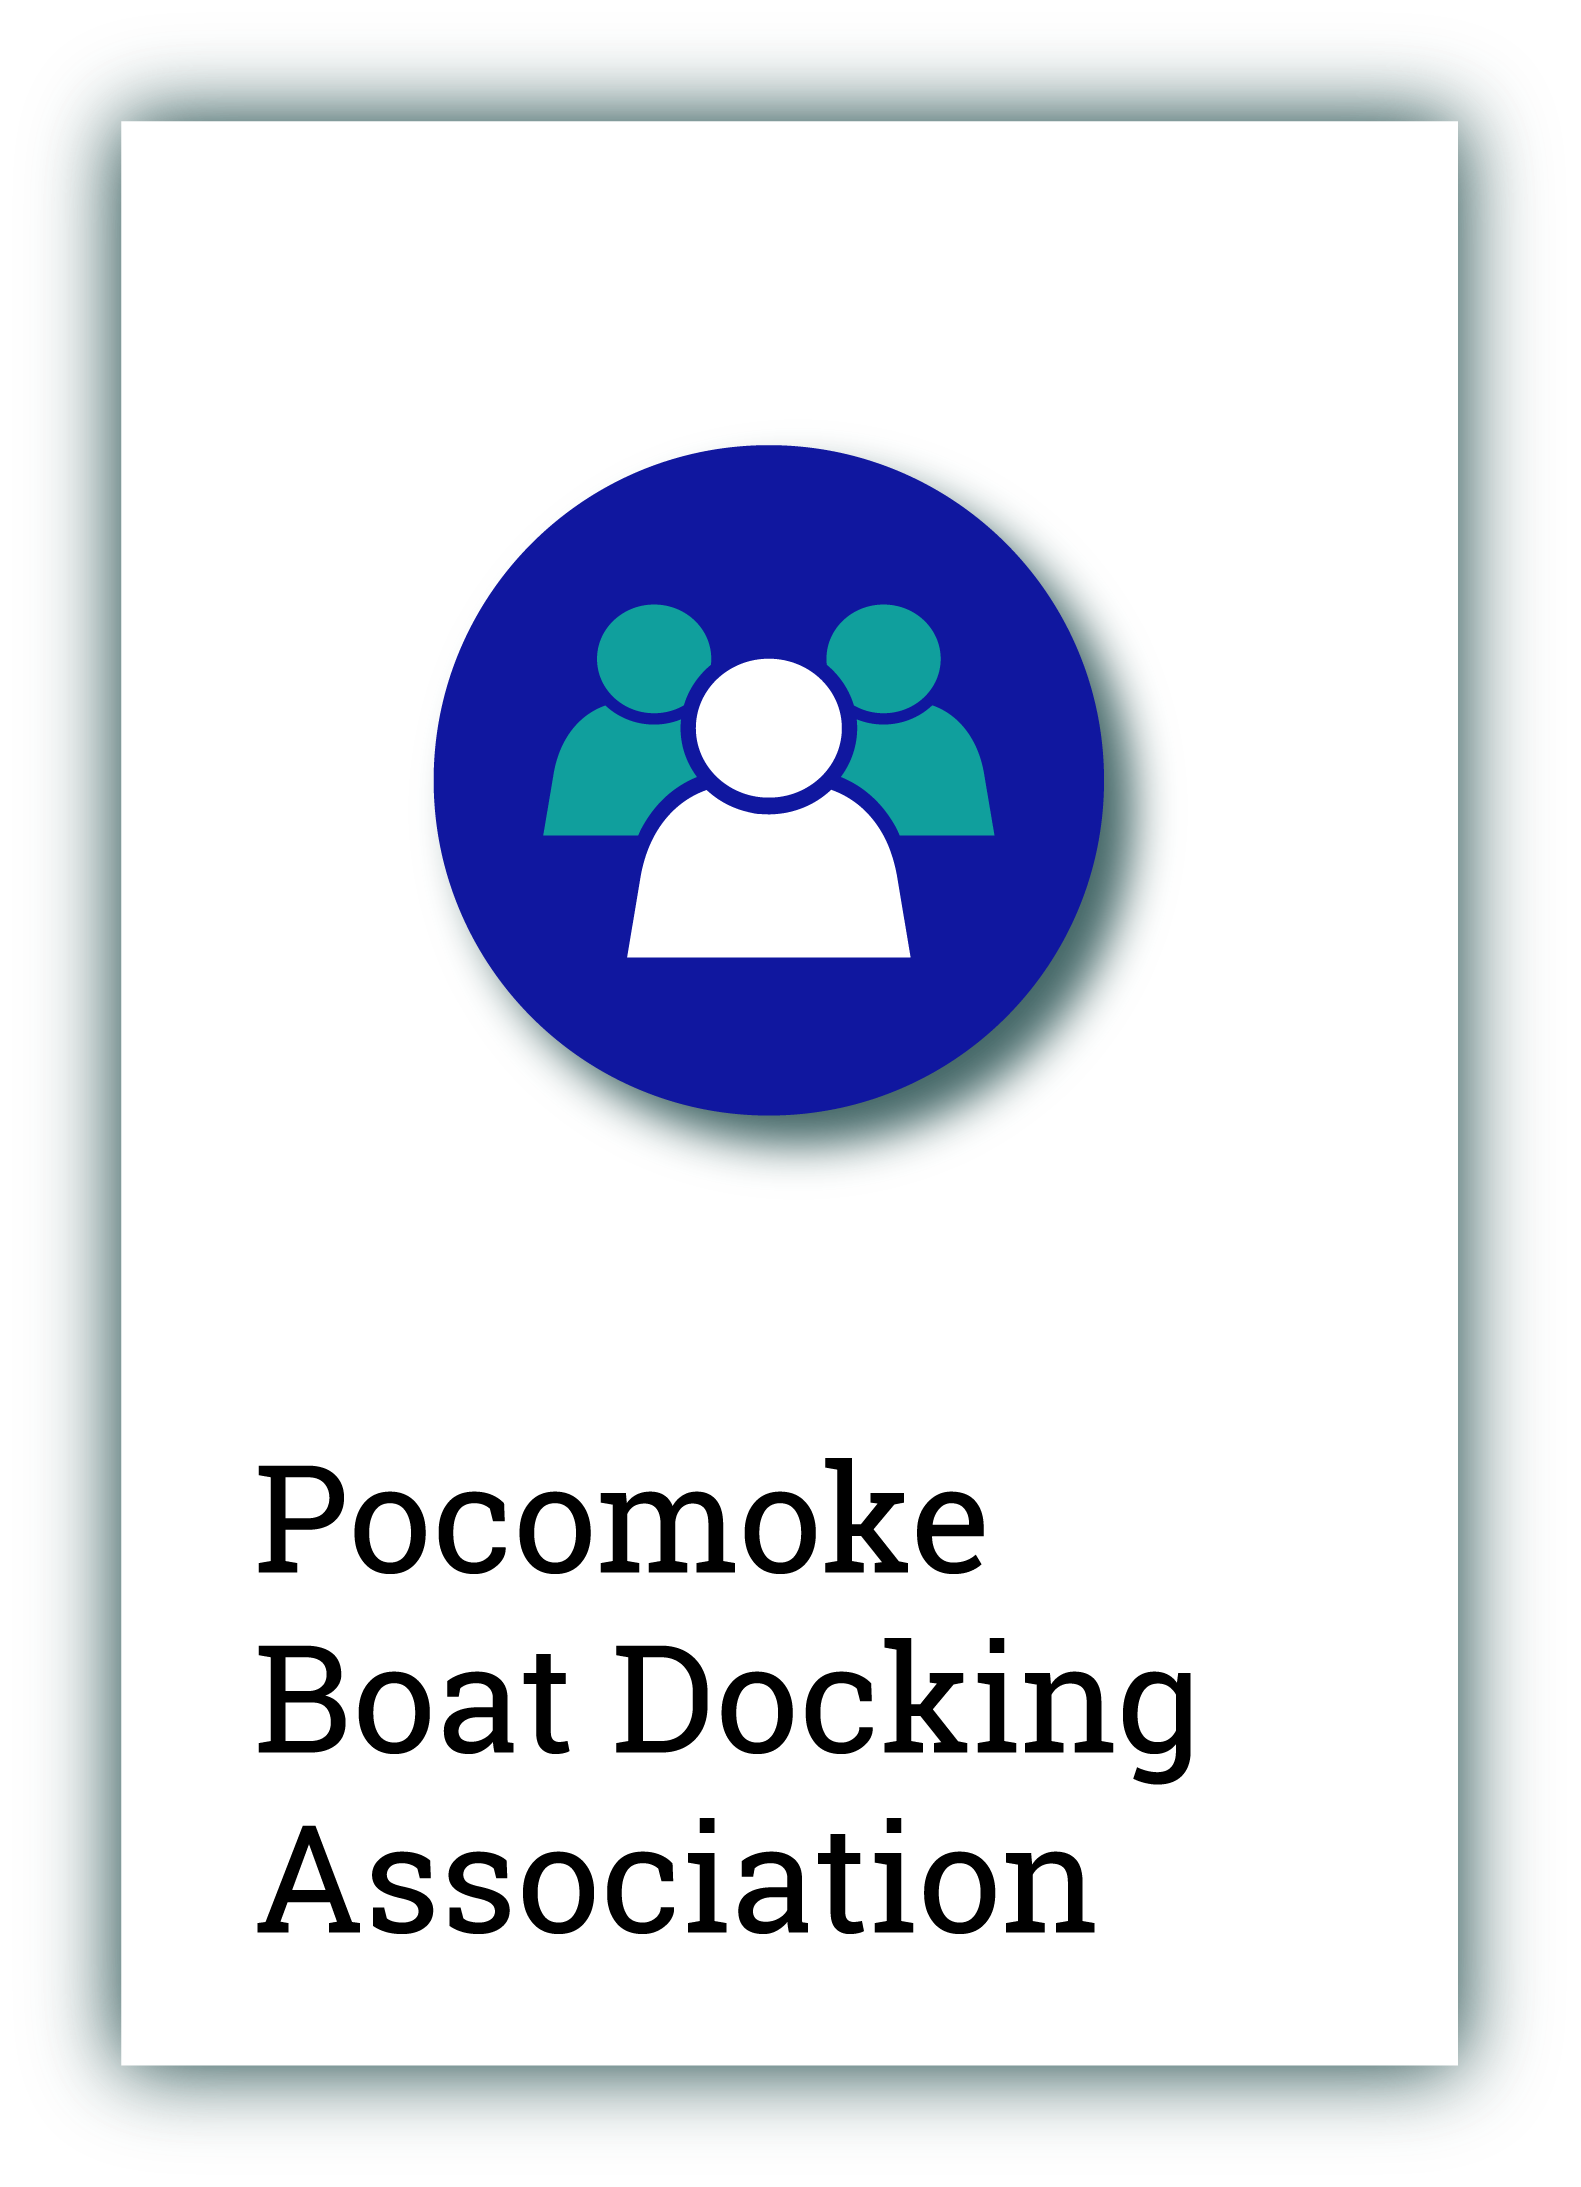 Pocomoke Boat Docking Association 2